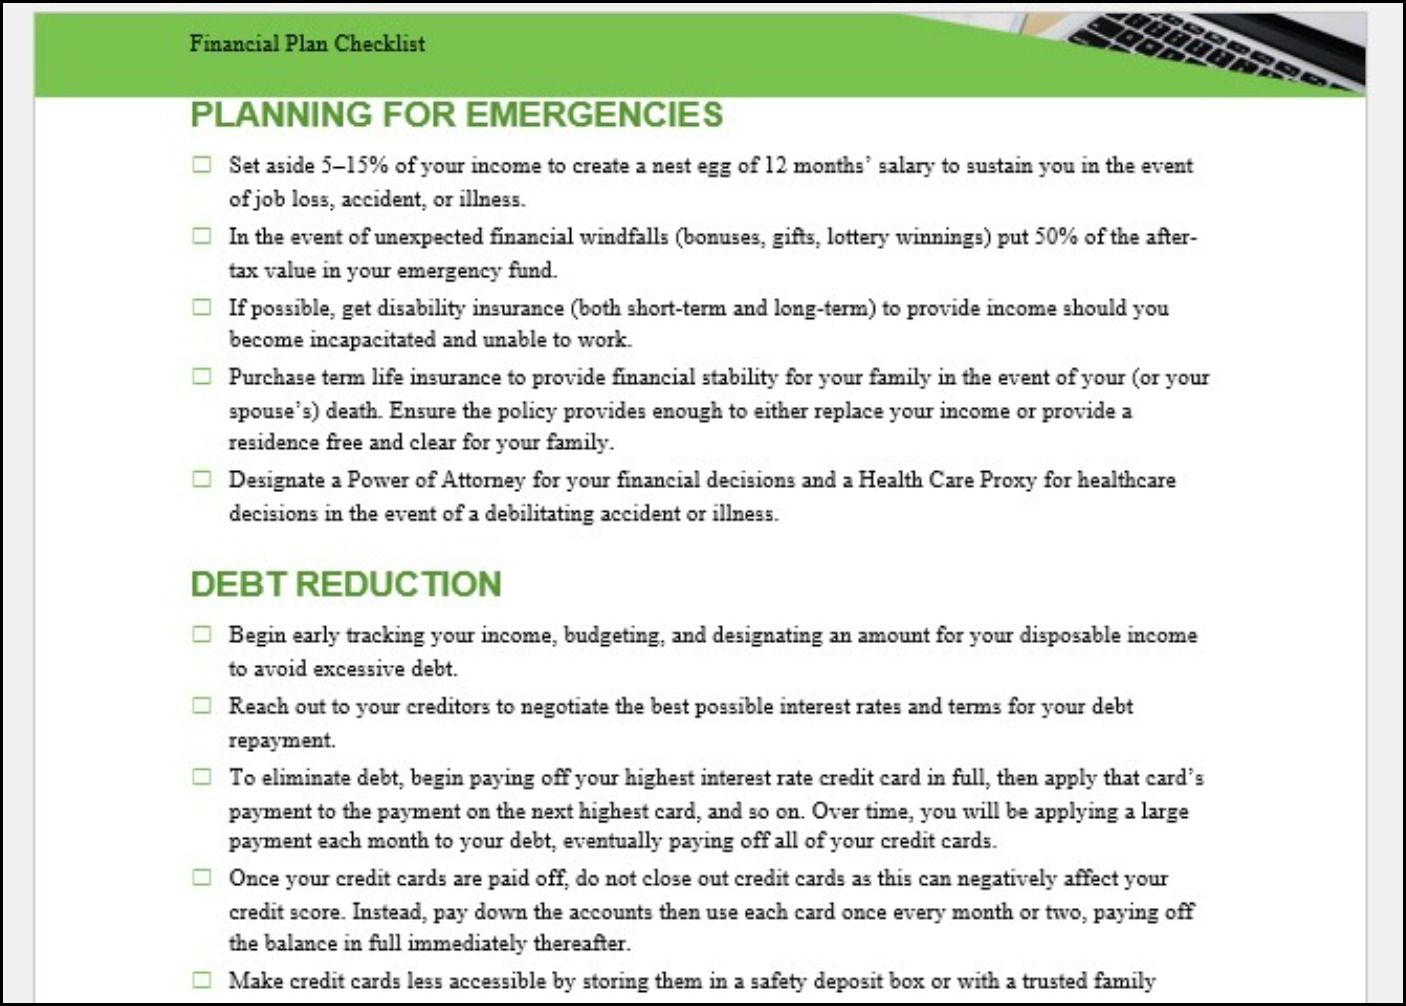 Financial planning checklist template